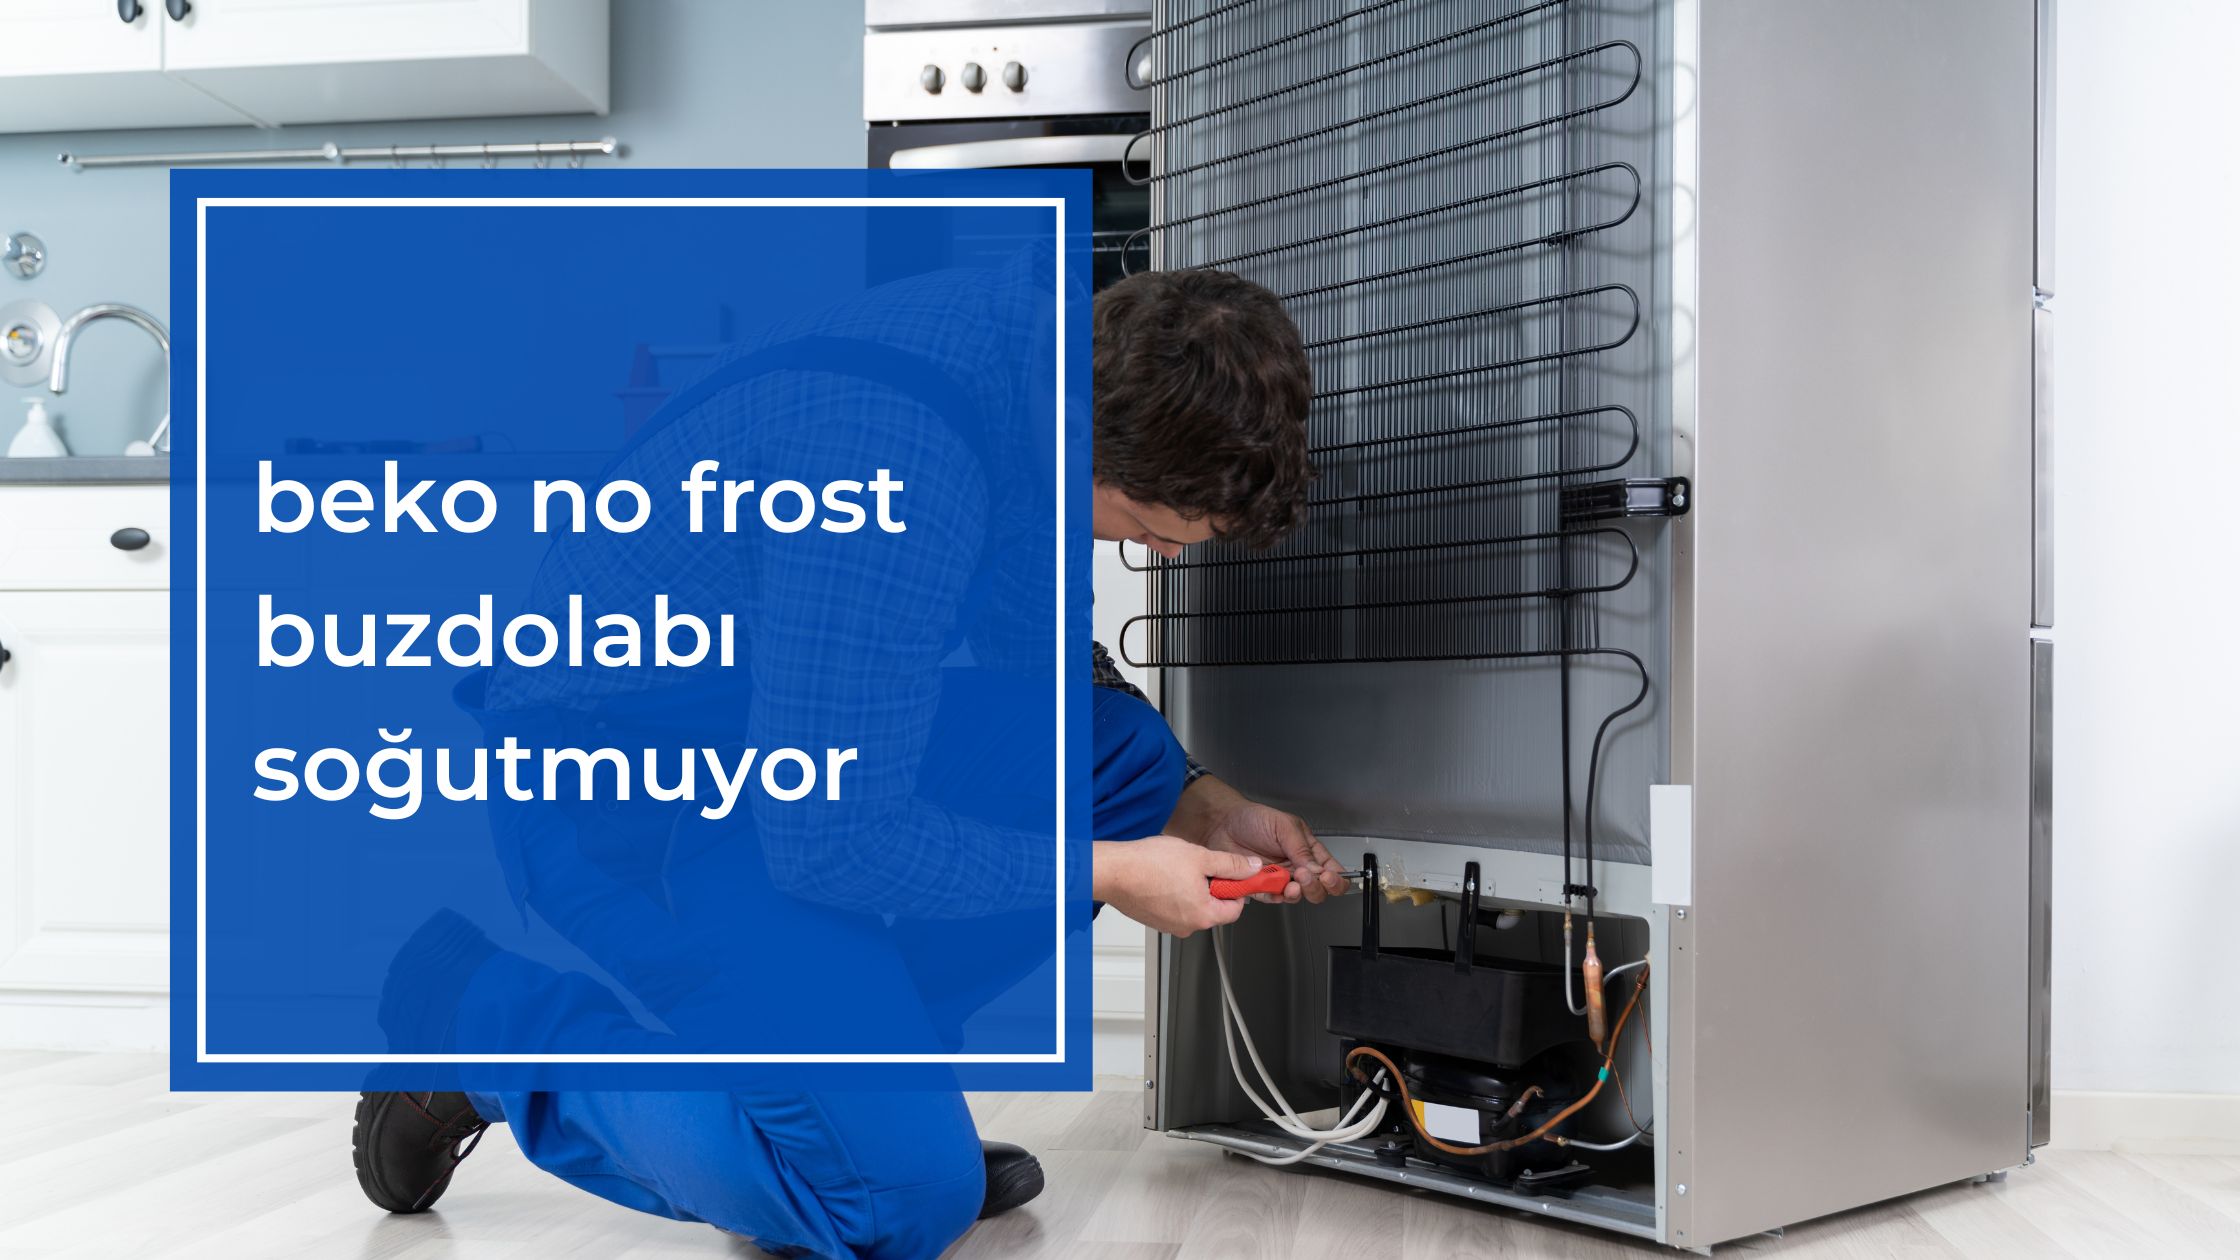 Beko No Frost Buzdolabı Soğutmuyor